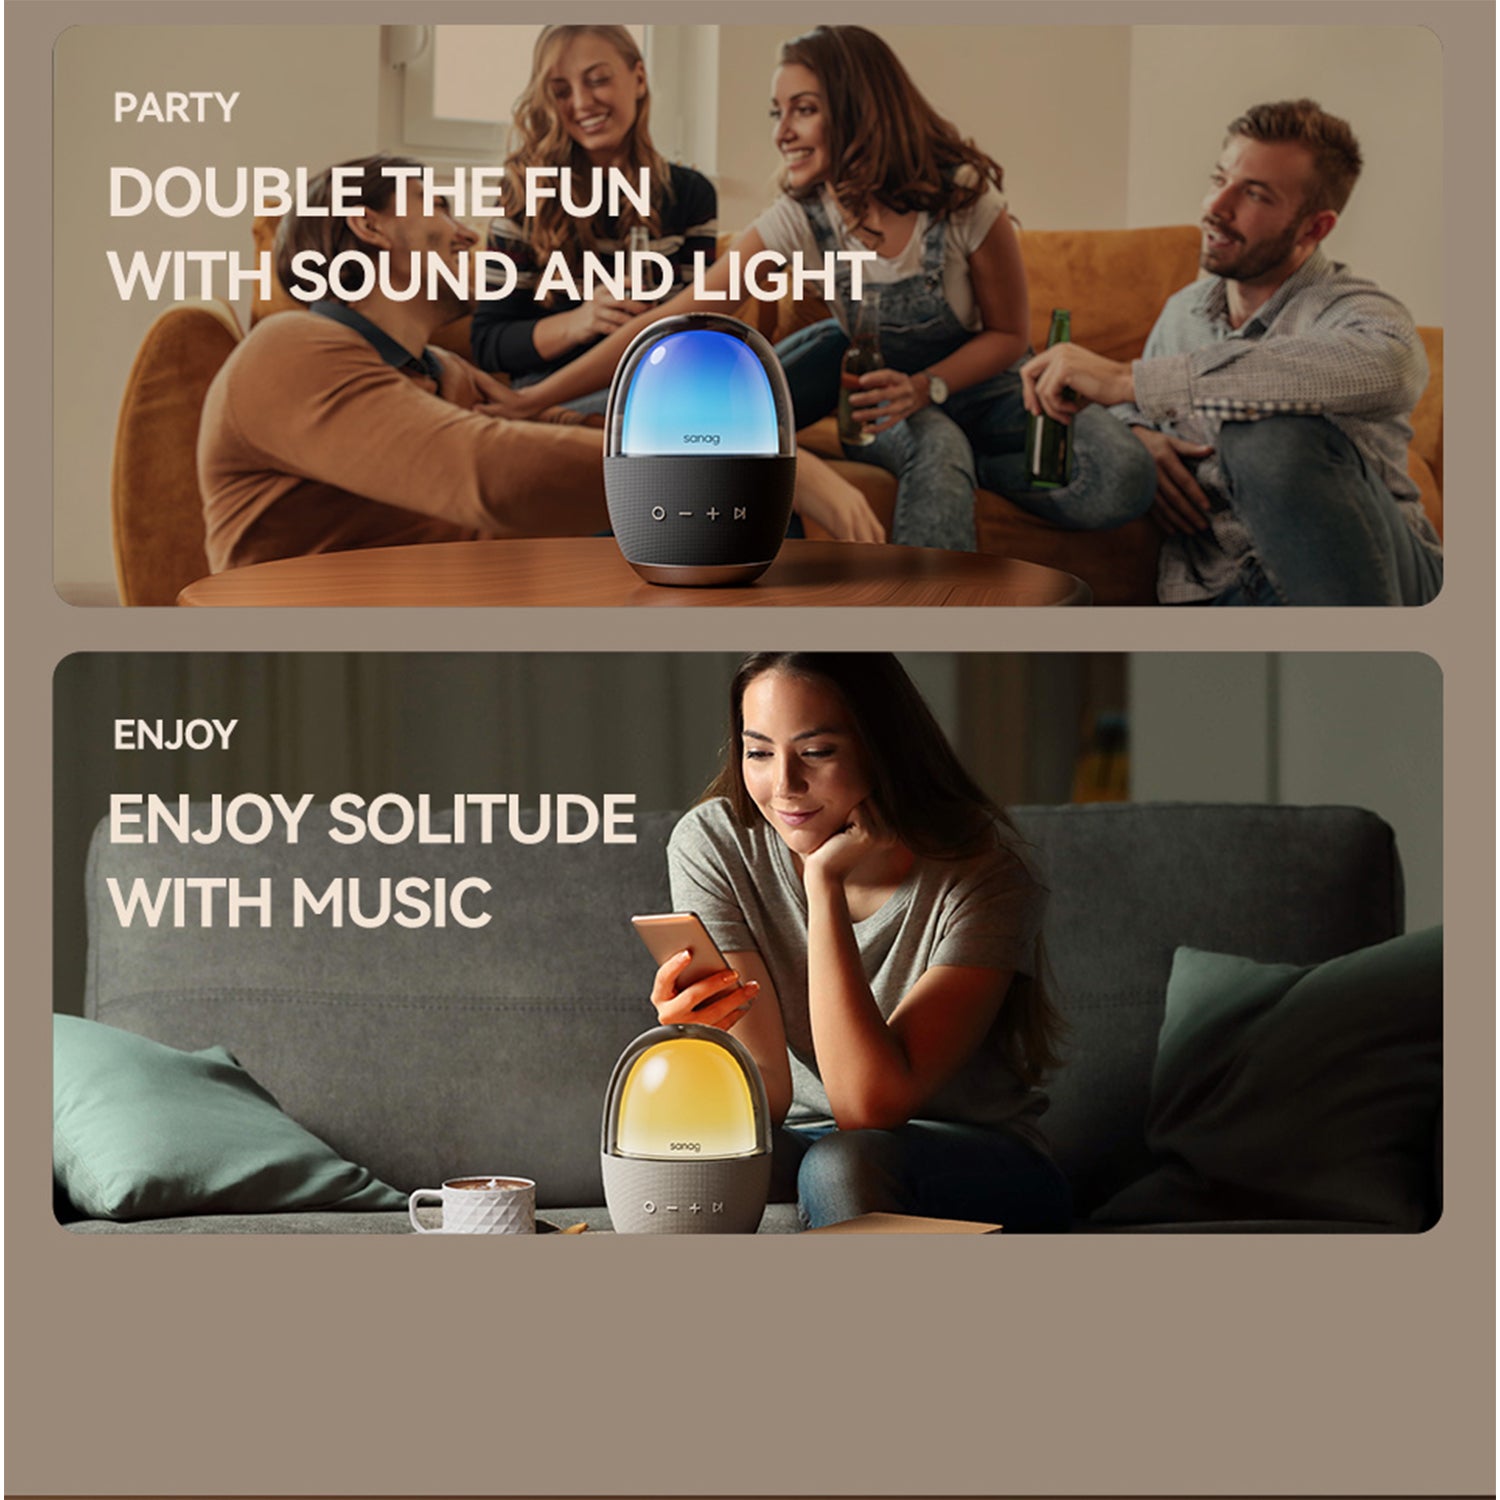 O2W SELECTION O2W SELECTION SANAG V33 Pro | V33 Pro Max Home KTV Hi-Fi Dolby LED Light-up Bluetooth Wireless Speaker, Black